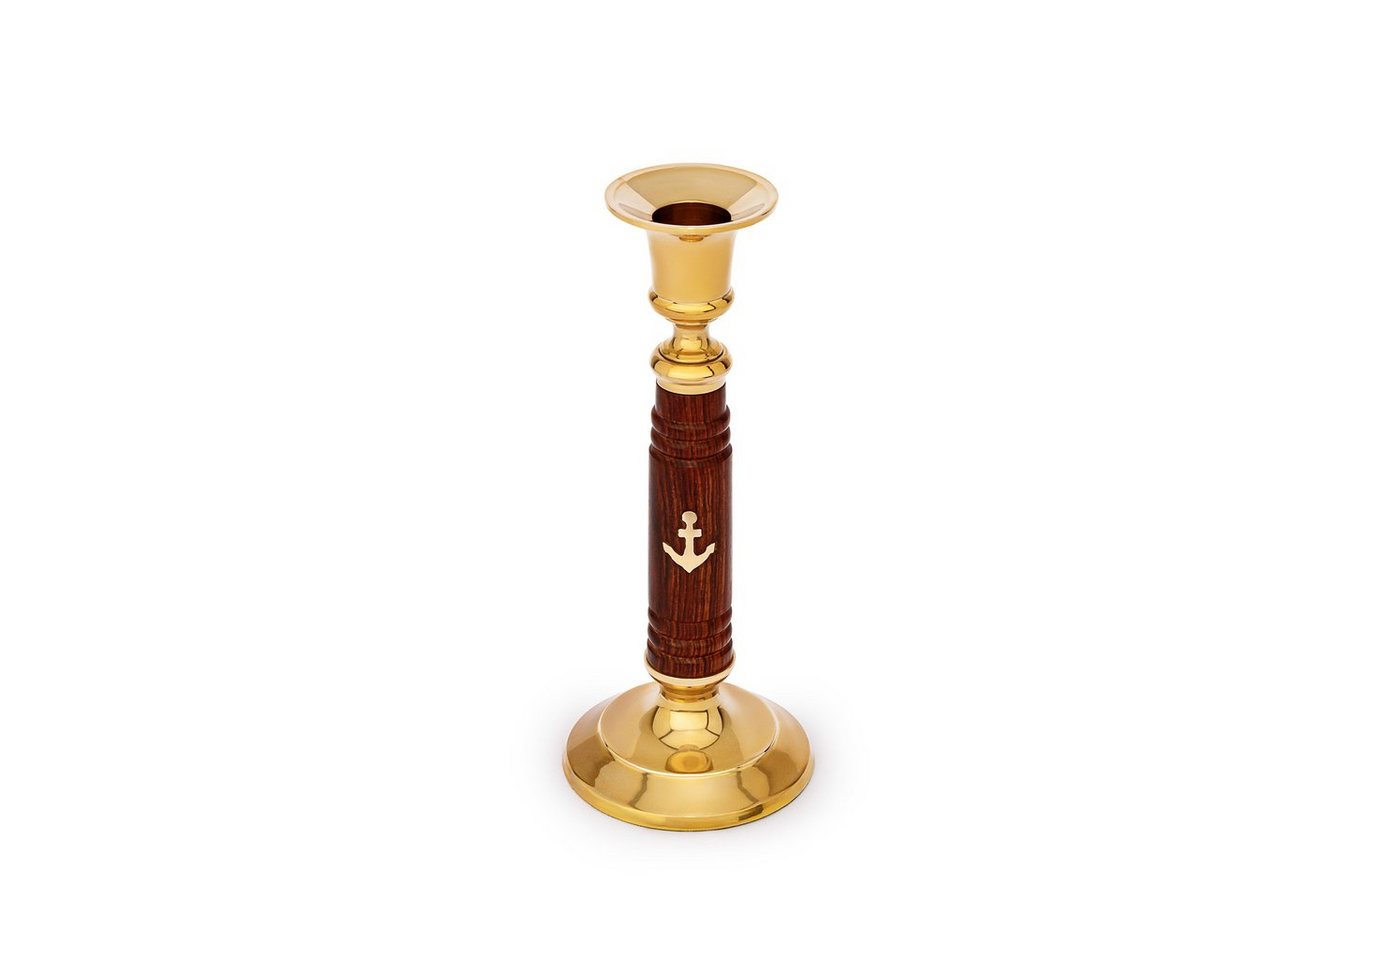 NKlaus Kerzenhalter Maritim Kerzenständer aus Holz und Messing gold 17,5cm hoch Vintage Ke (Kerzenhalter) von NKlaus